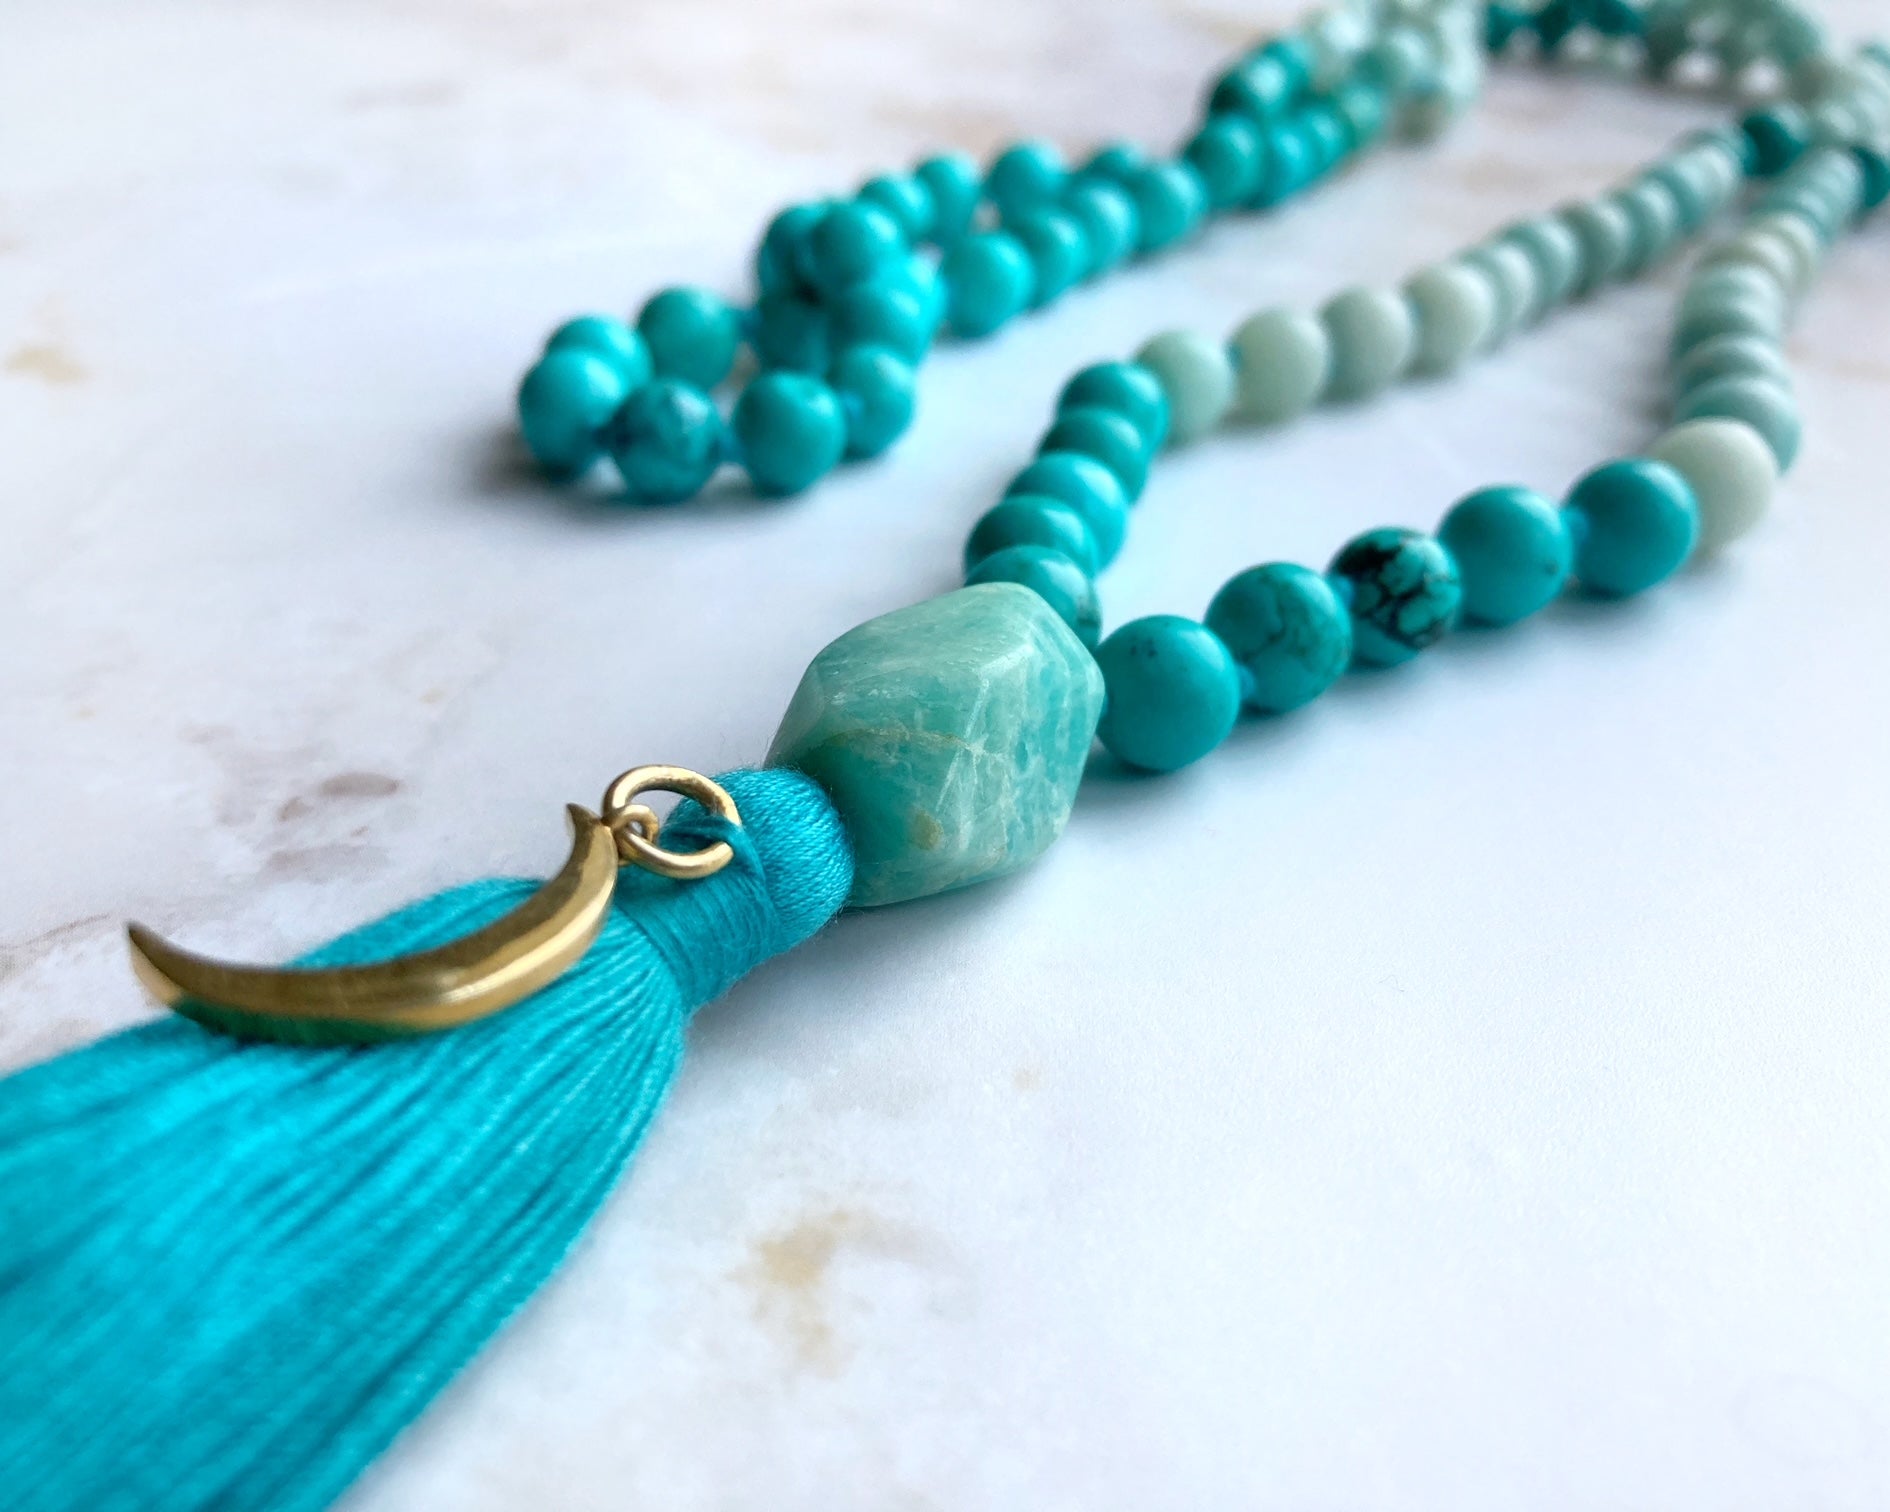 Our malas, prayer beads for reciting mantras or meditation